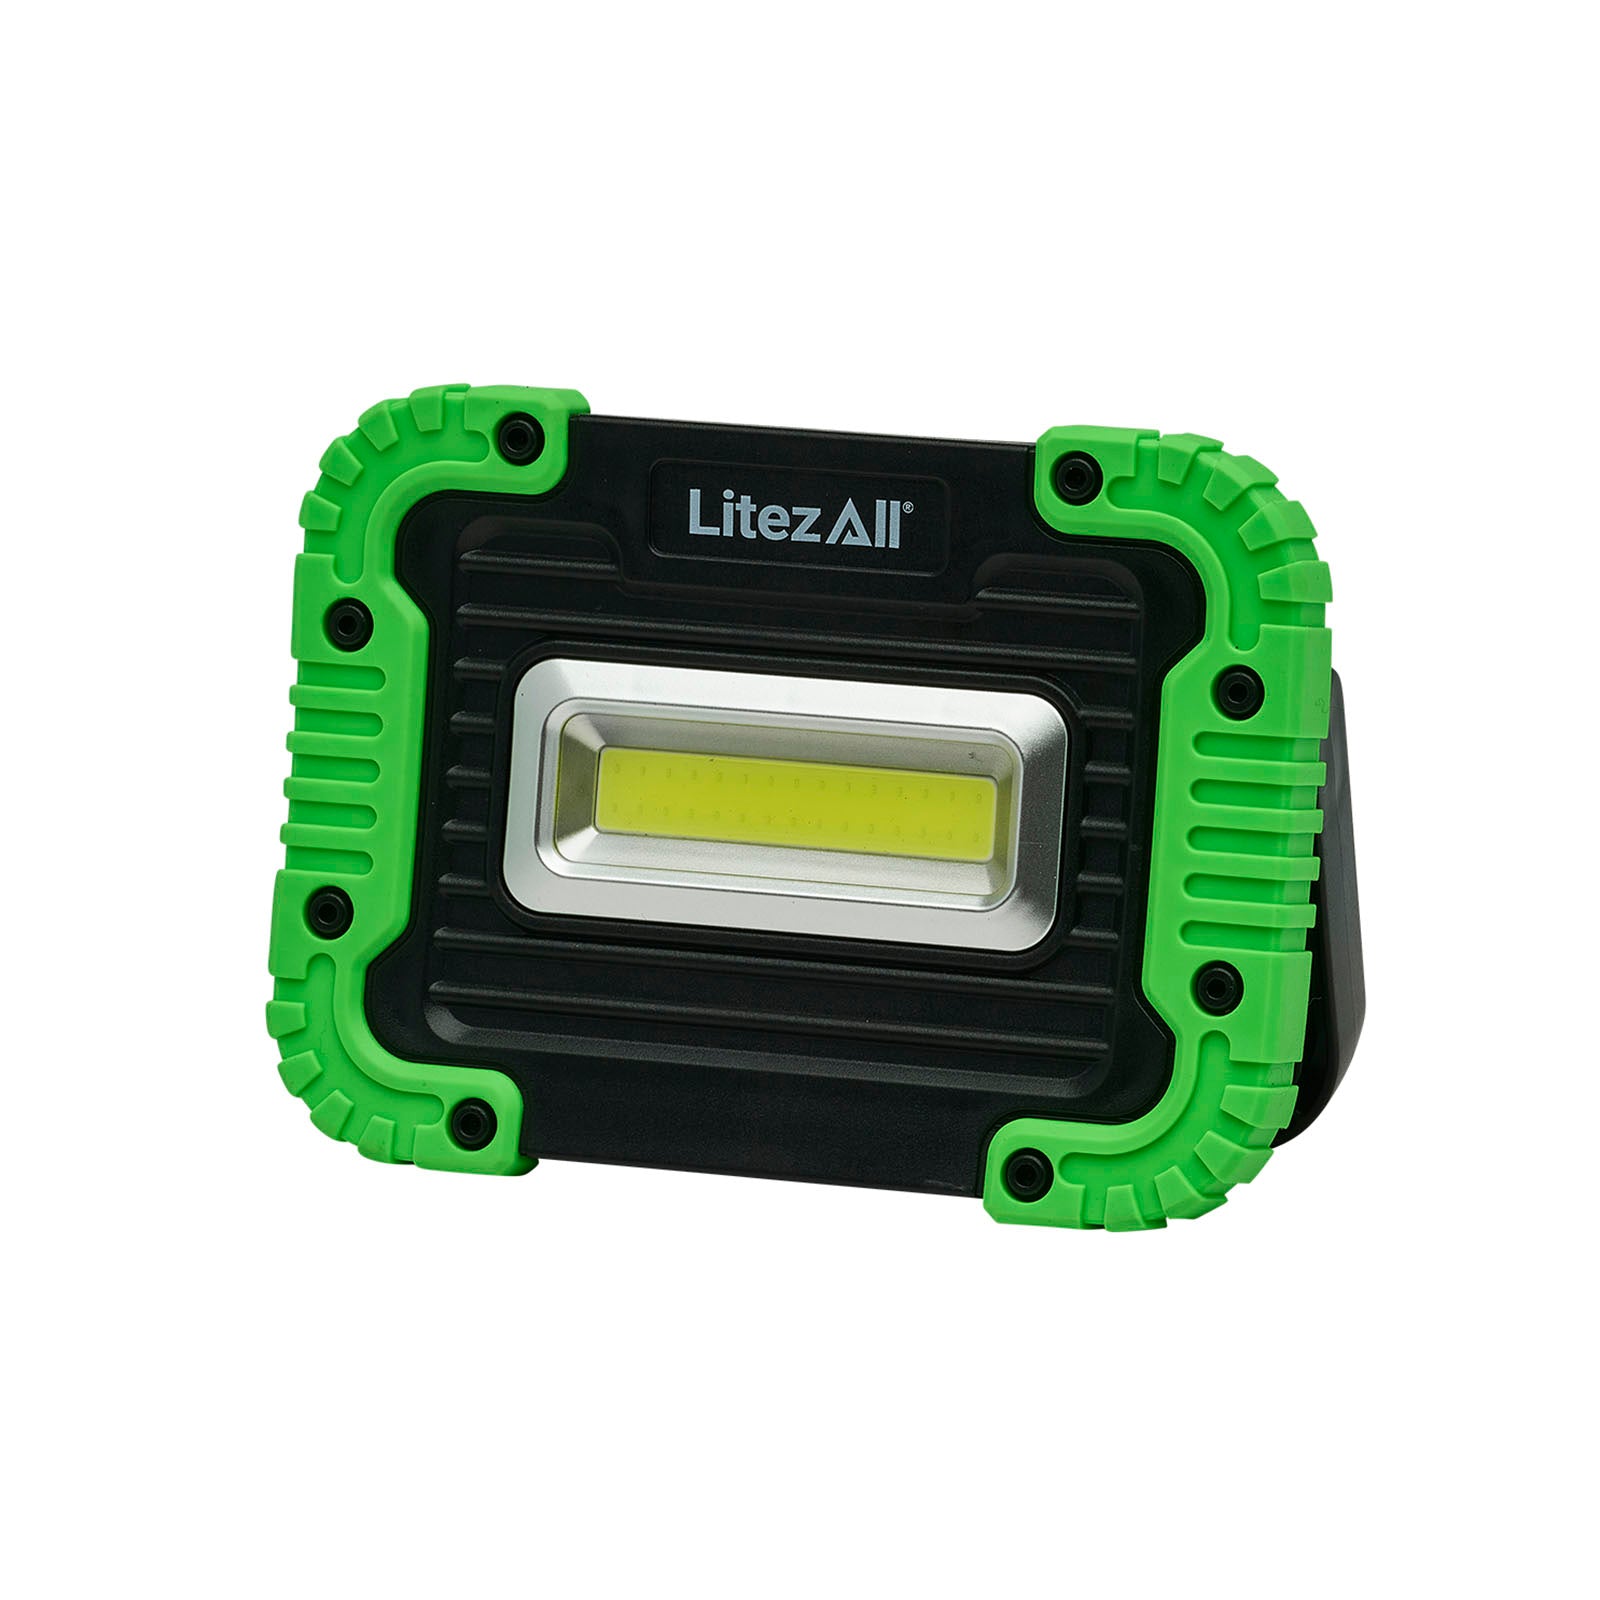 LitezAll 1000 Lumen Compact Kickstand Work Light - LitezAll - Work Lights - 49